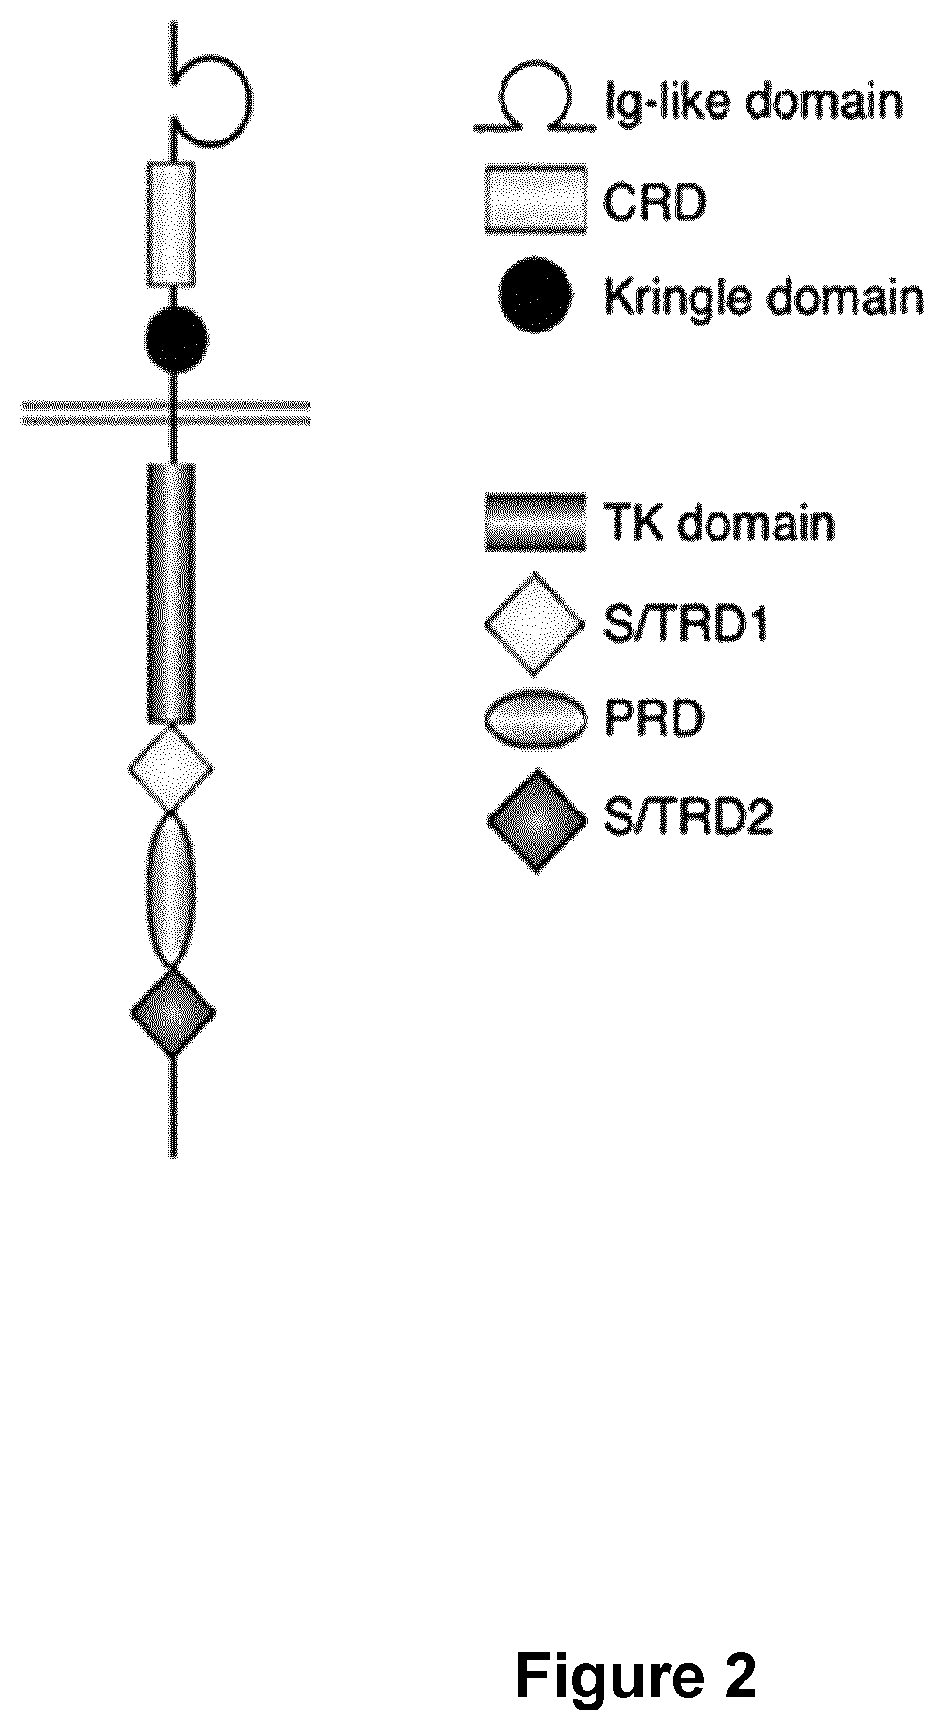 ROR1 (NTRKR1) specific chimeric antigen receptors for cancer immunotherapy